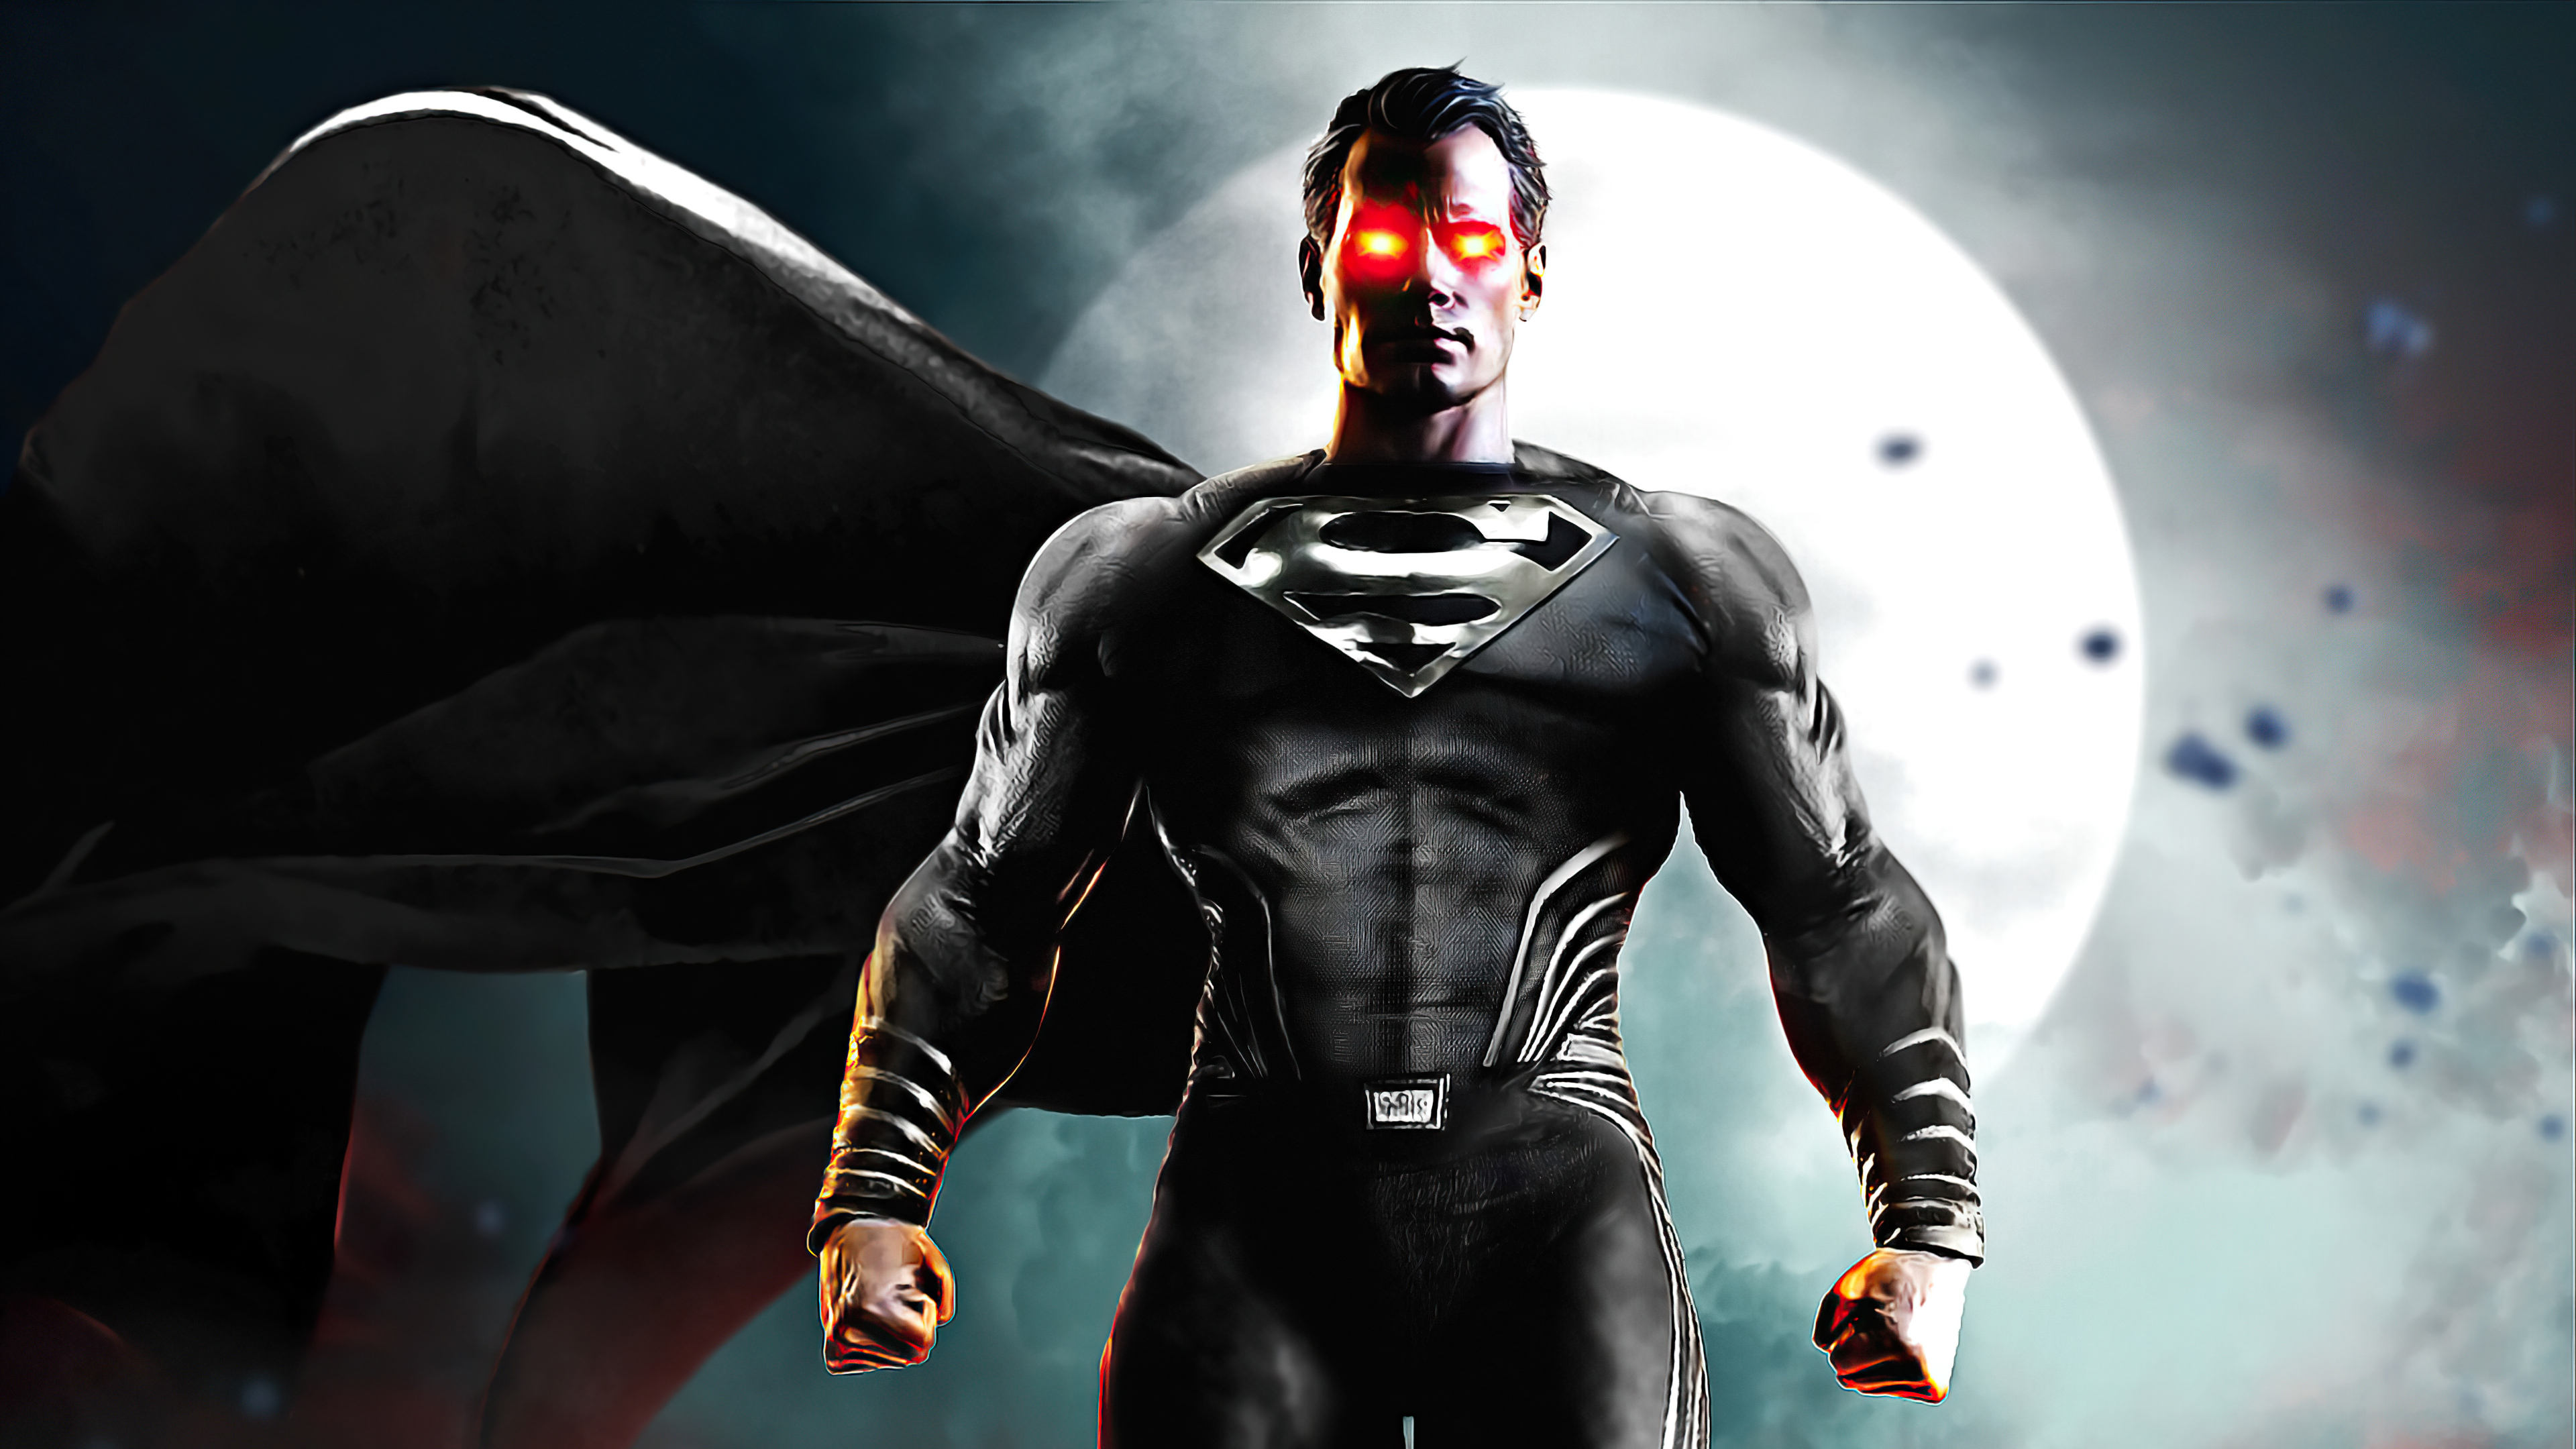 Wallpaper Superman Darkseid Superhero Dc Comics Justice League Background Download Free Image